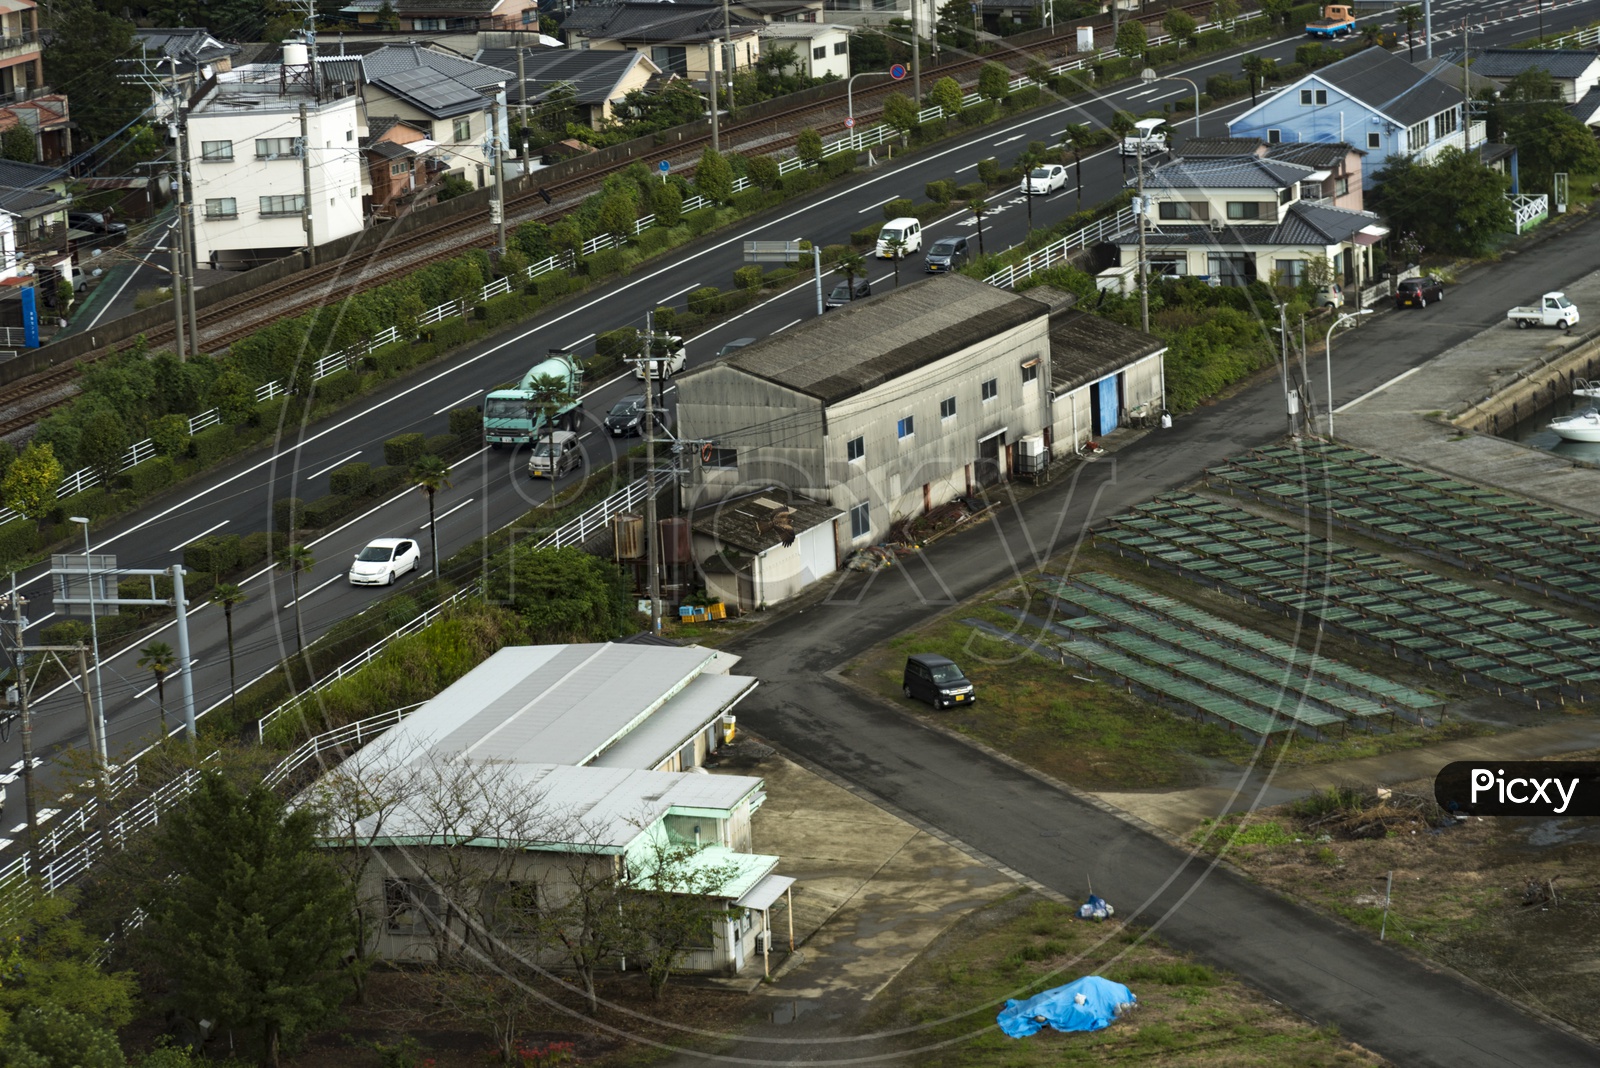 Aerial view of Oita city, Japan